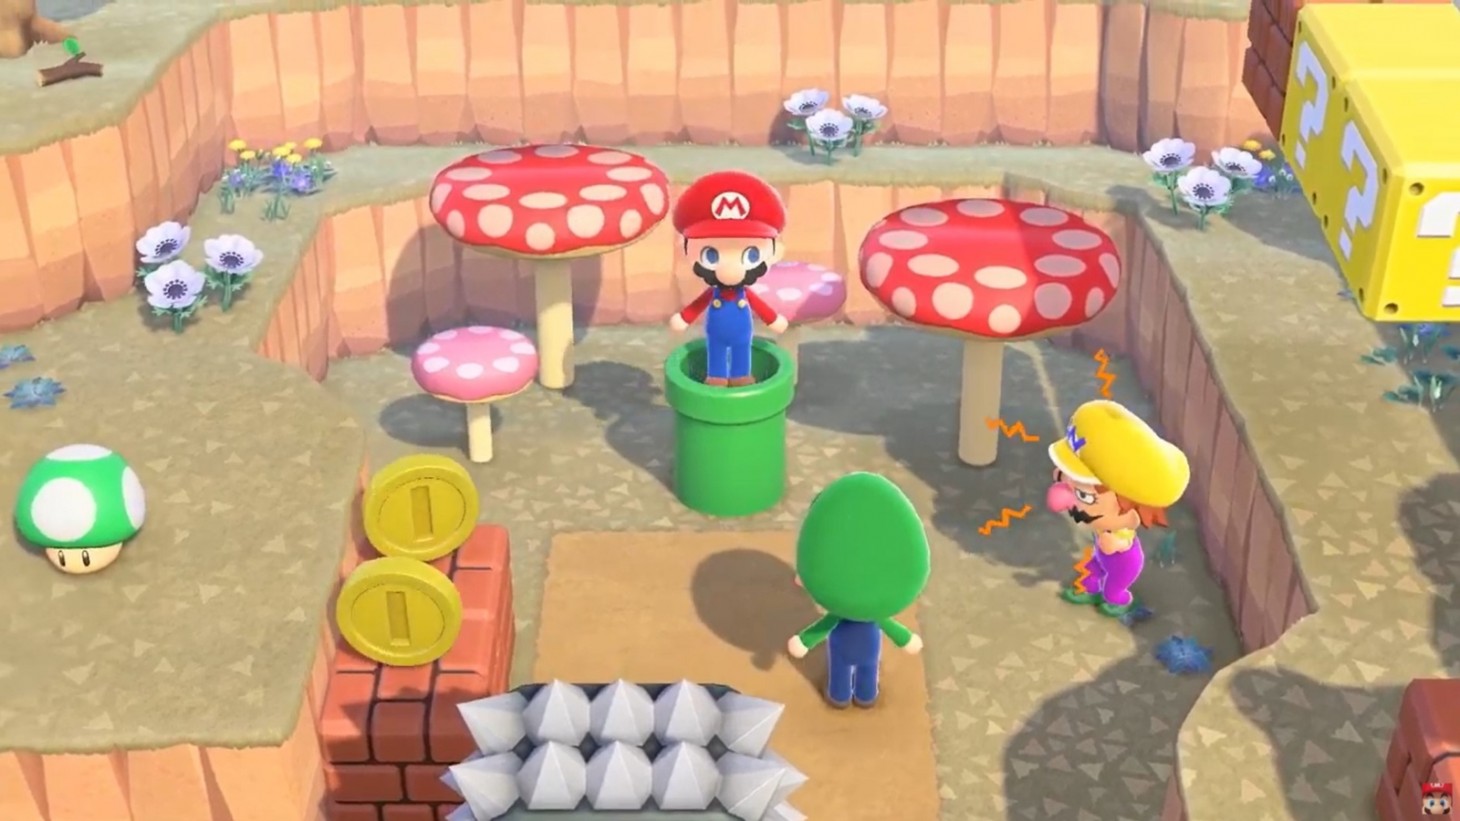 Nintendo is adding Mario-themed items to ‘Animal Crossing: New Horizons’